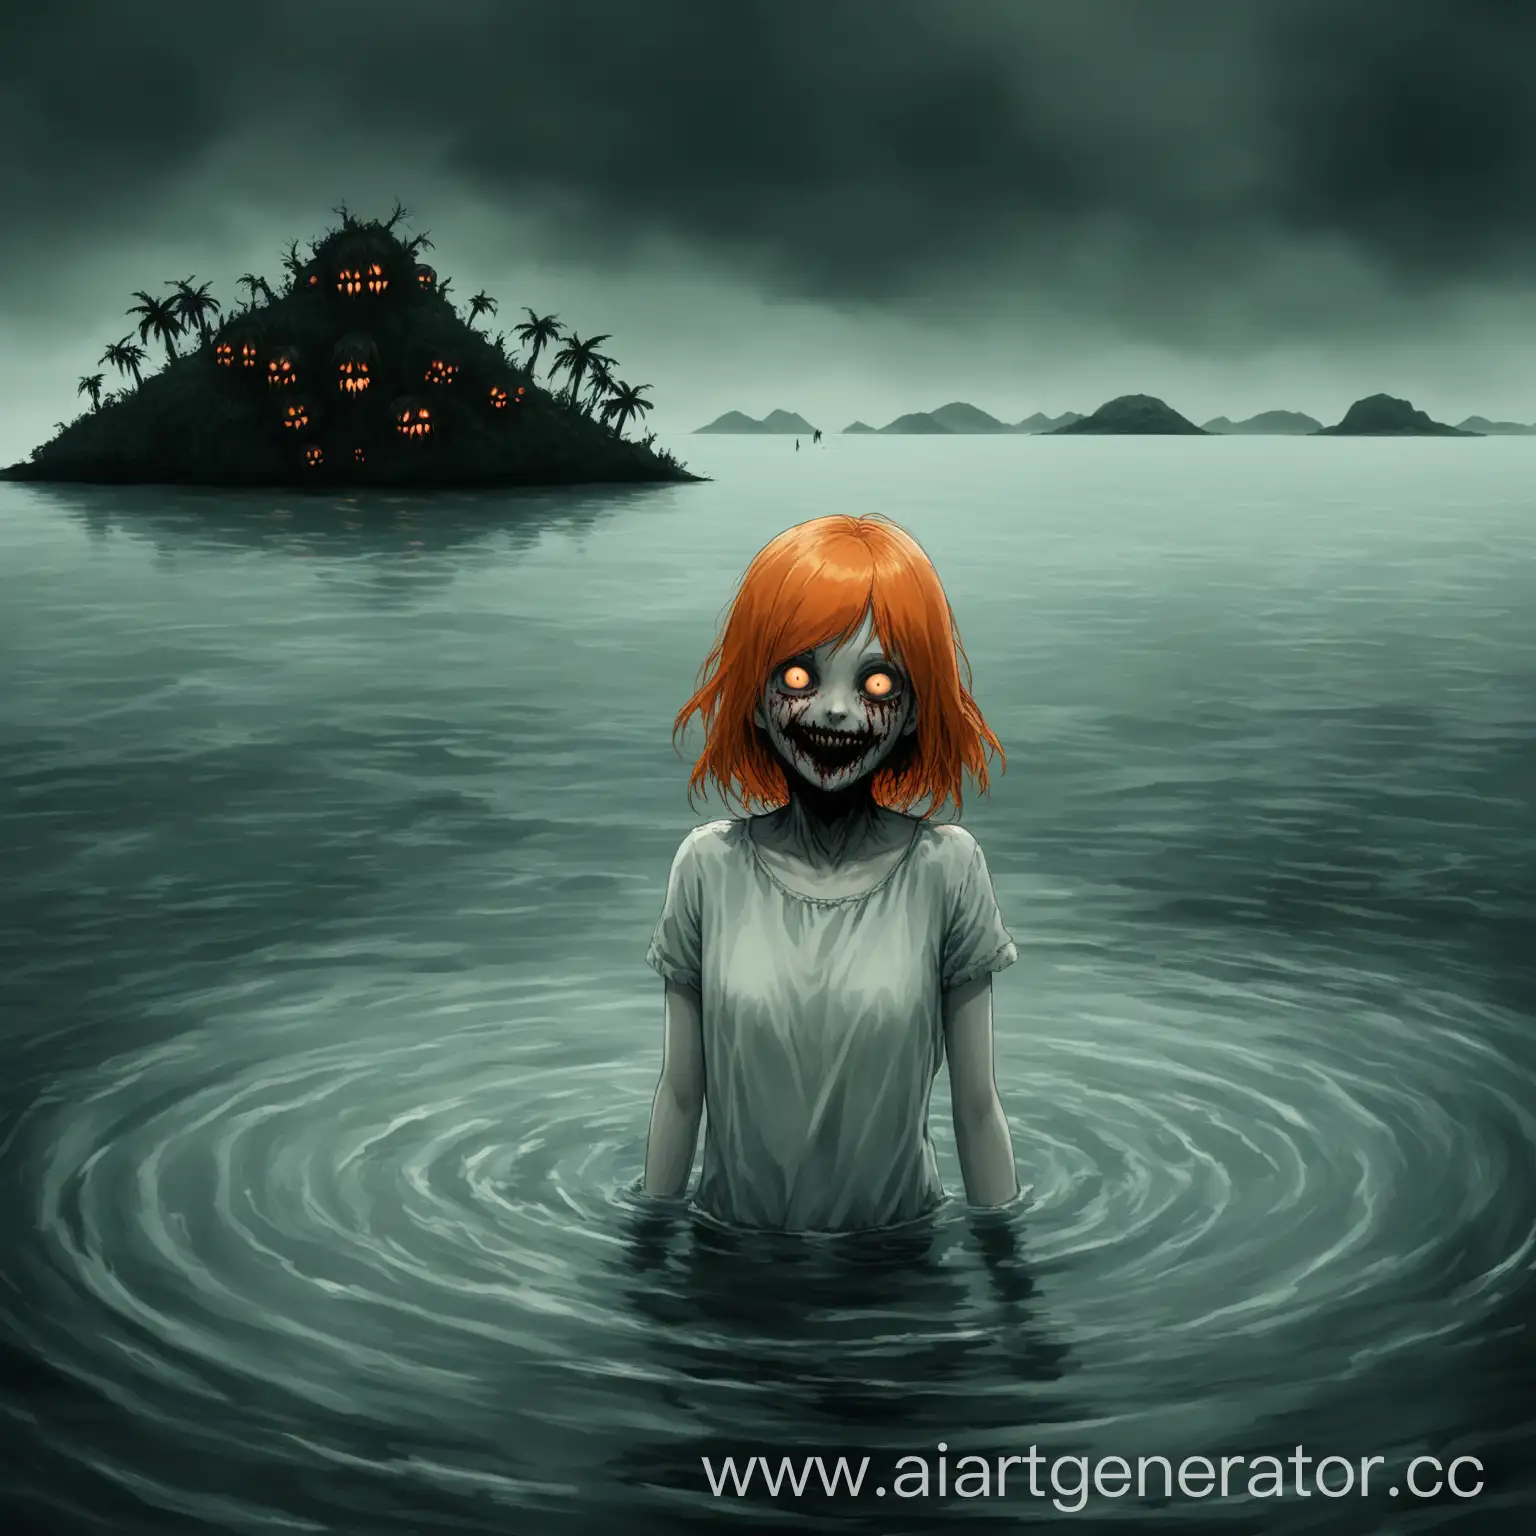 Mysterious-Encounter-Smiling-Girl-with-Orange-Hair-on-Uninhabited-Island